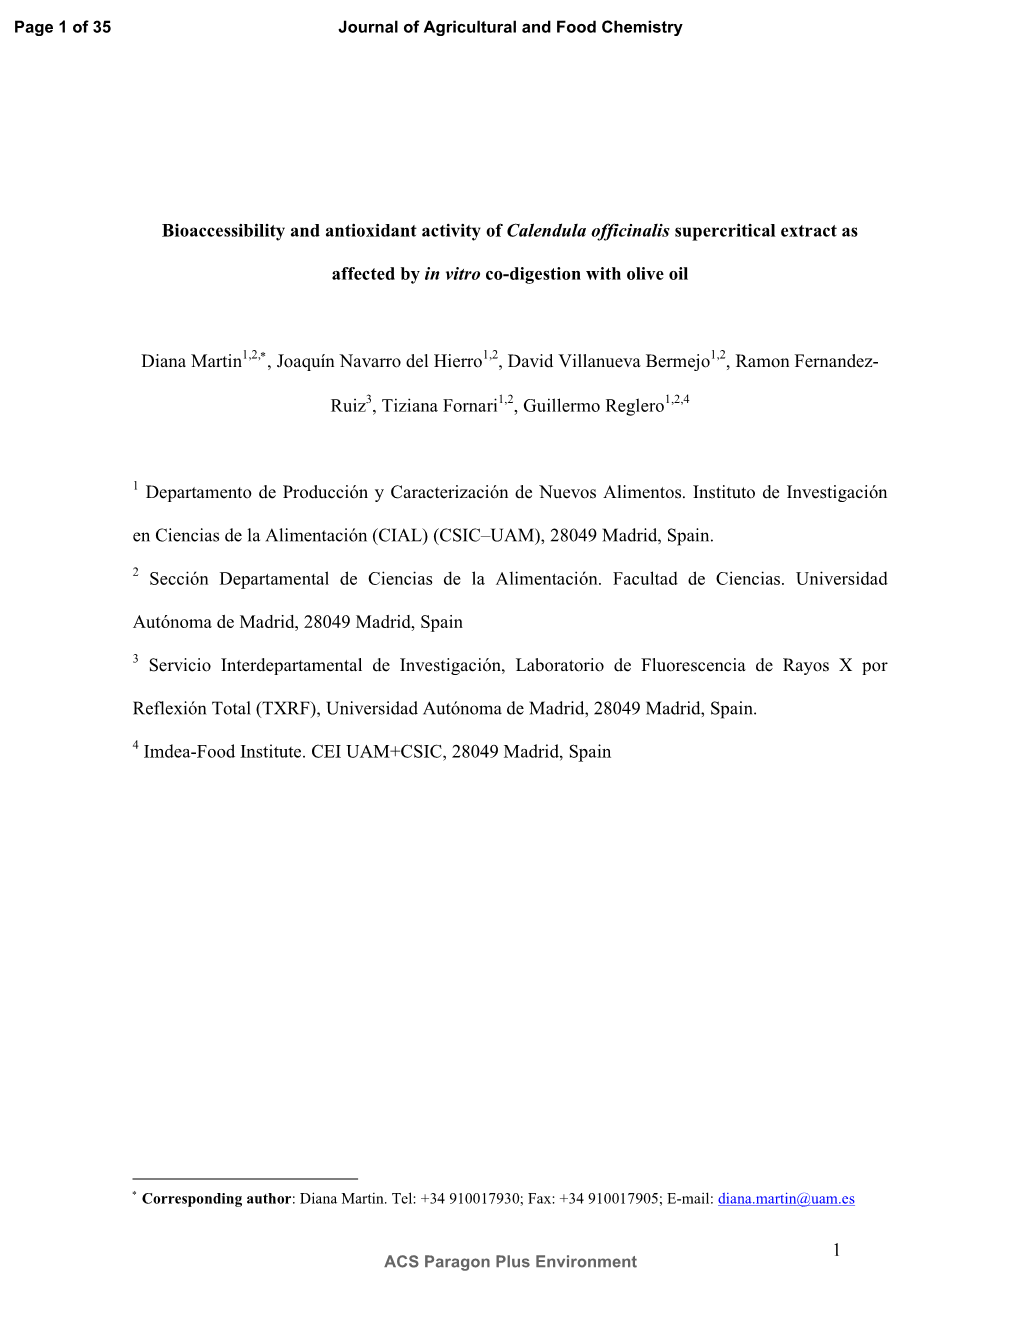 1 Bioaccessibility and Antioxidant Activity of Calendula Officinalis